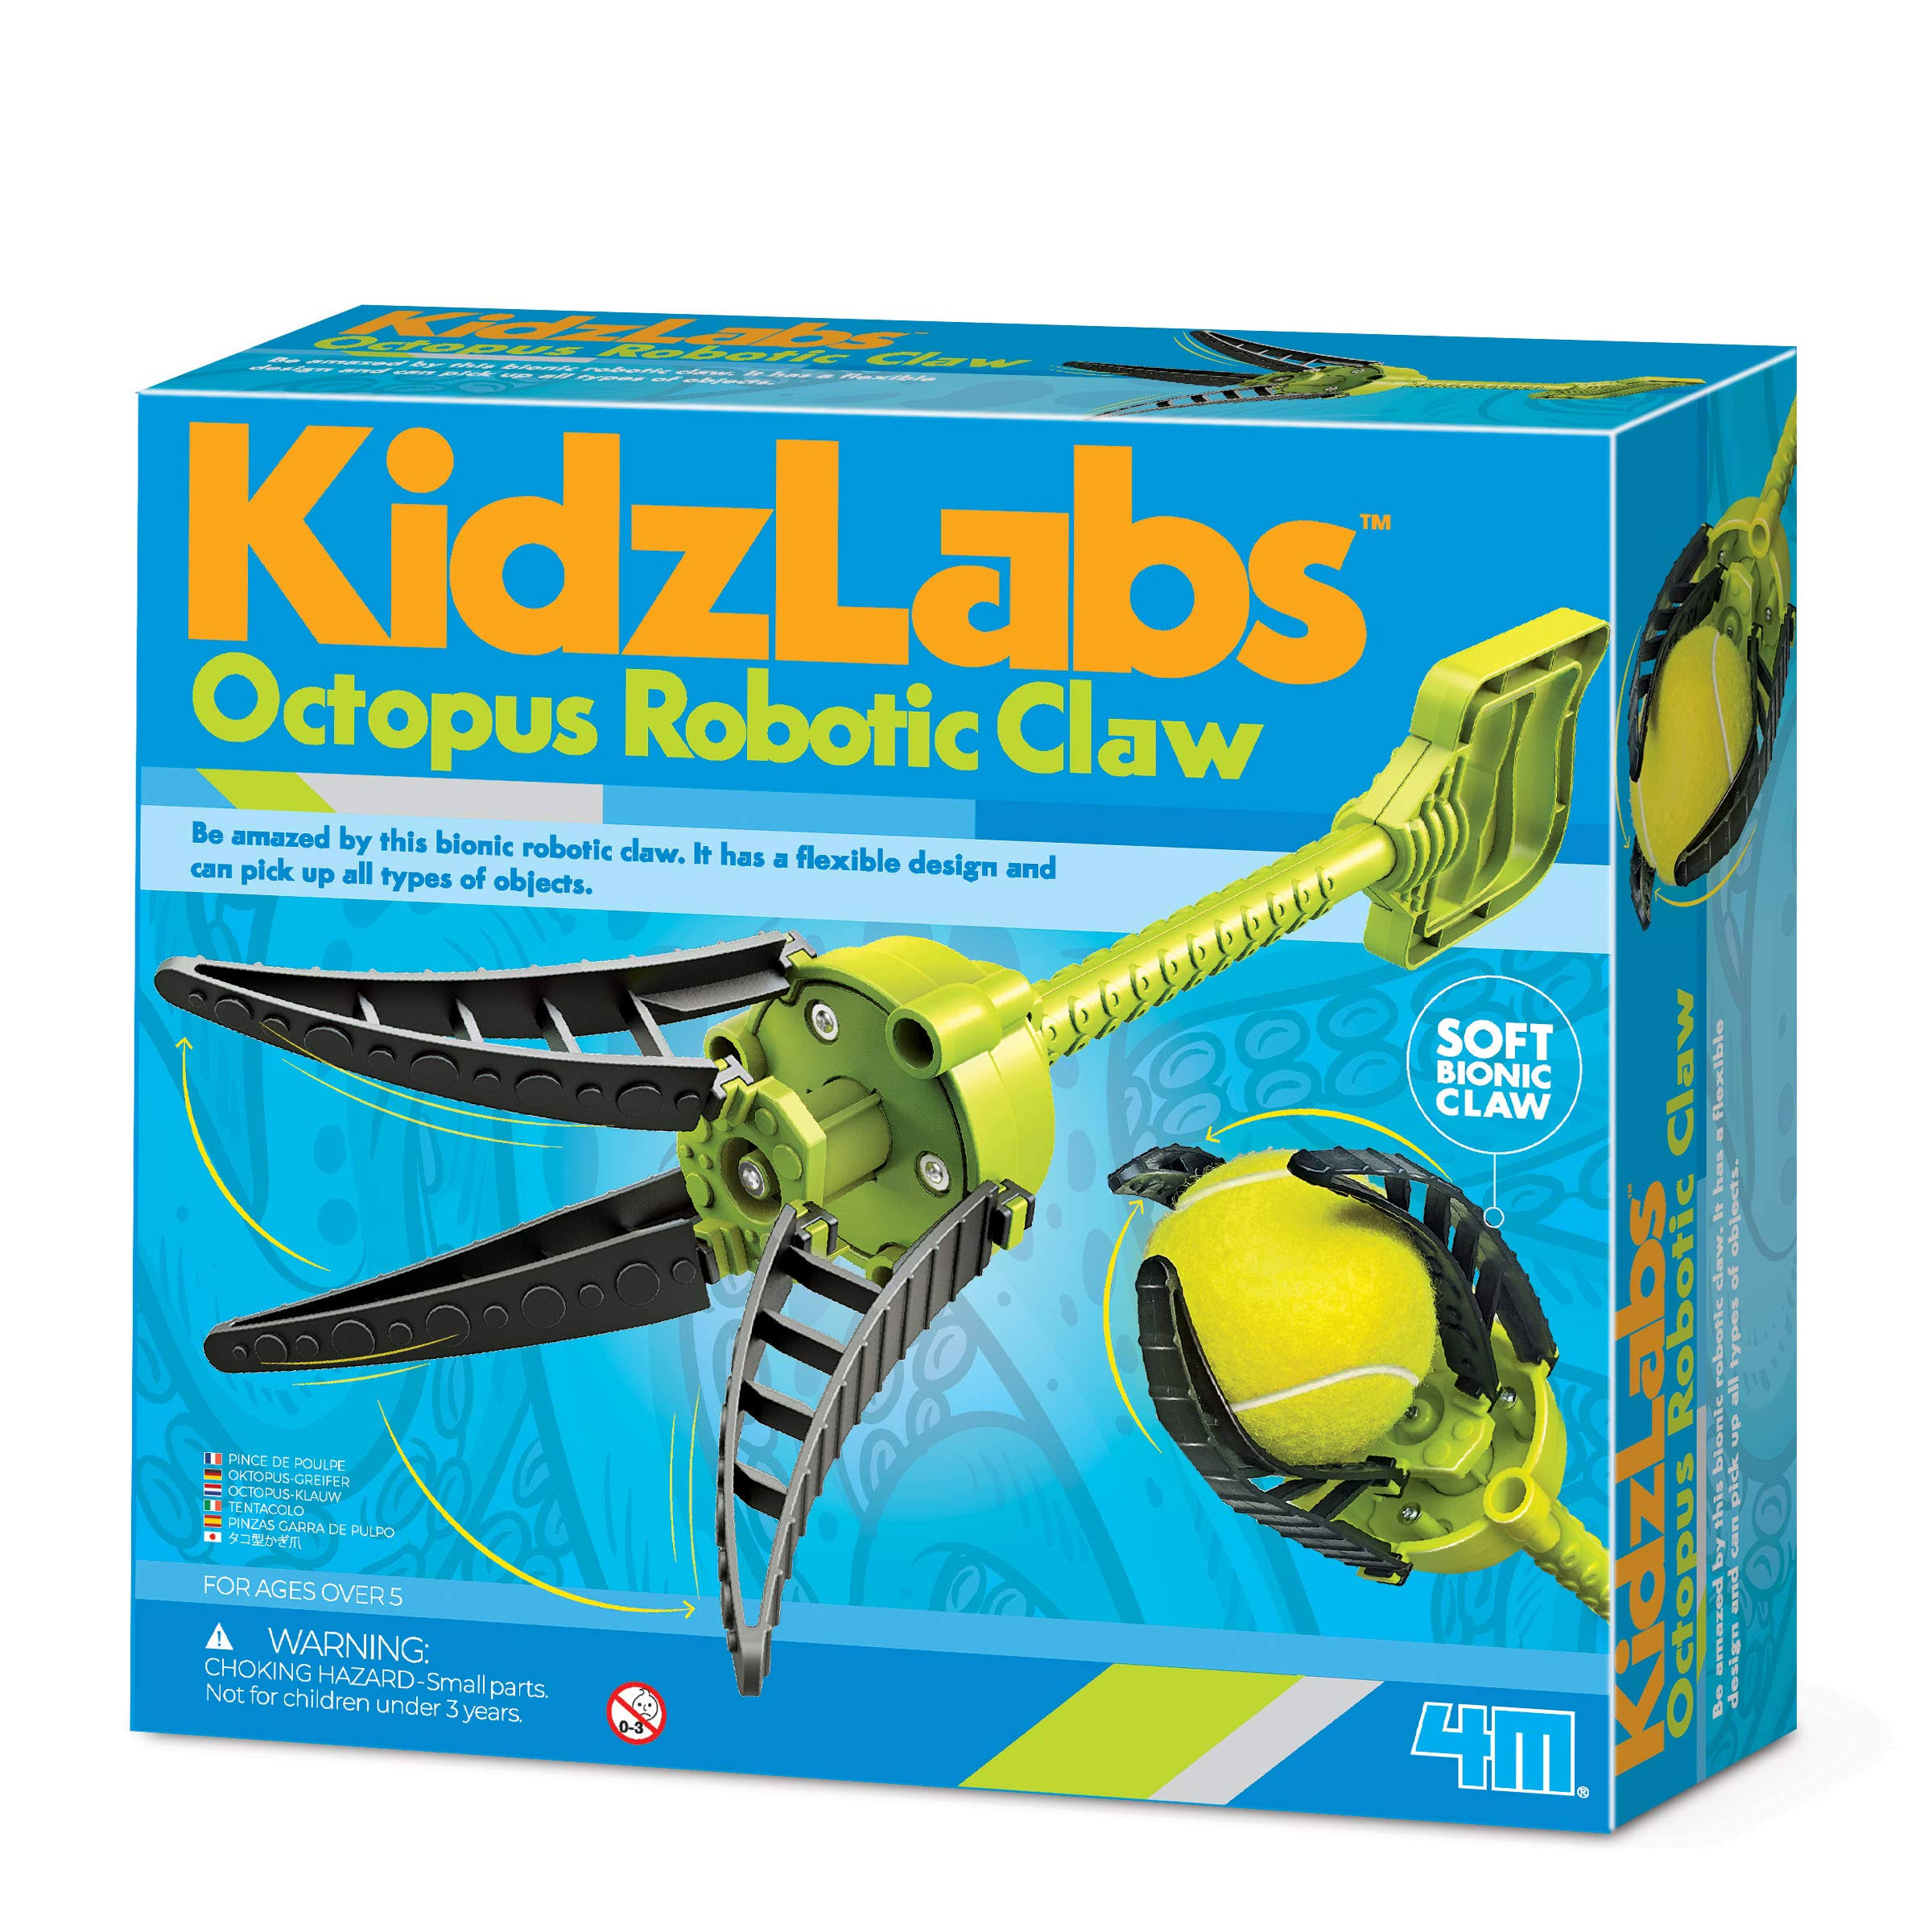 Octopus Robotic Claw kidzlabs-4m